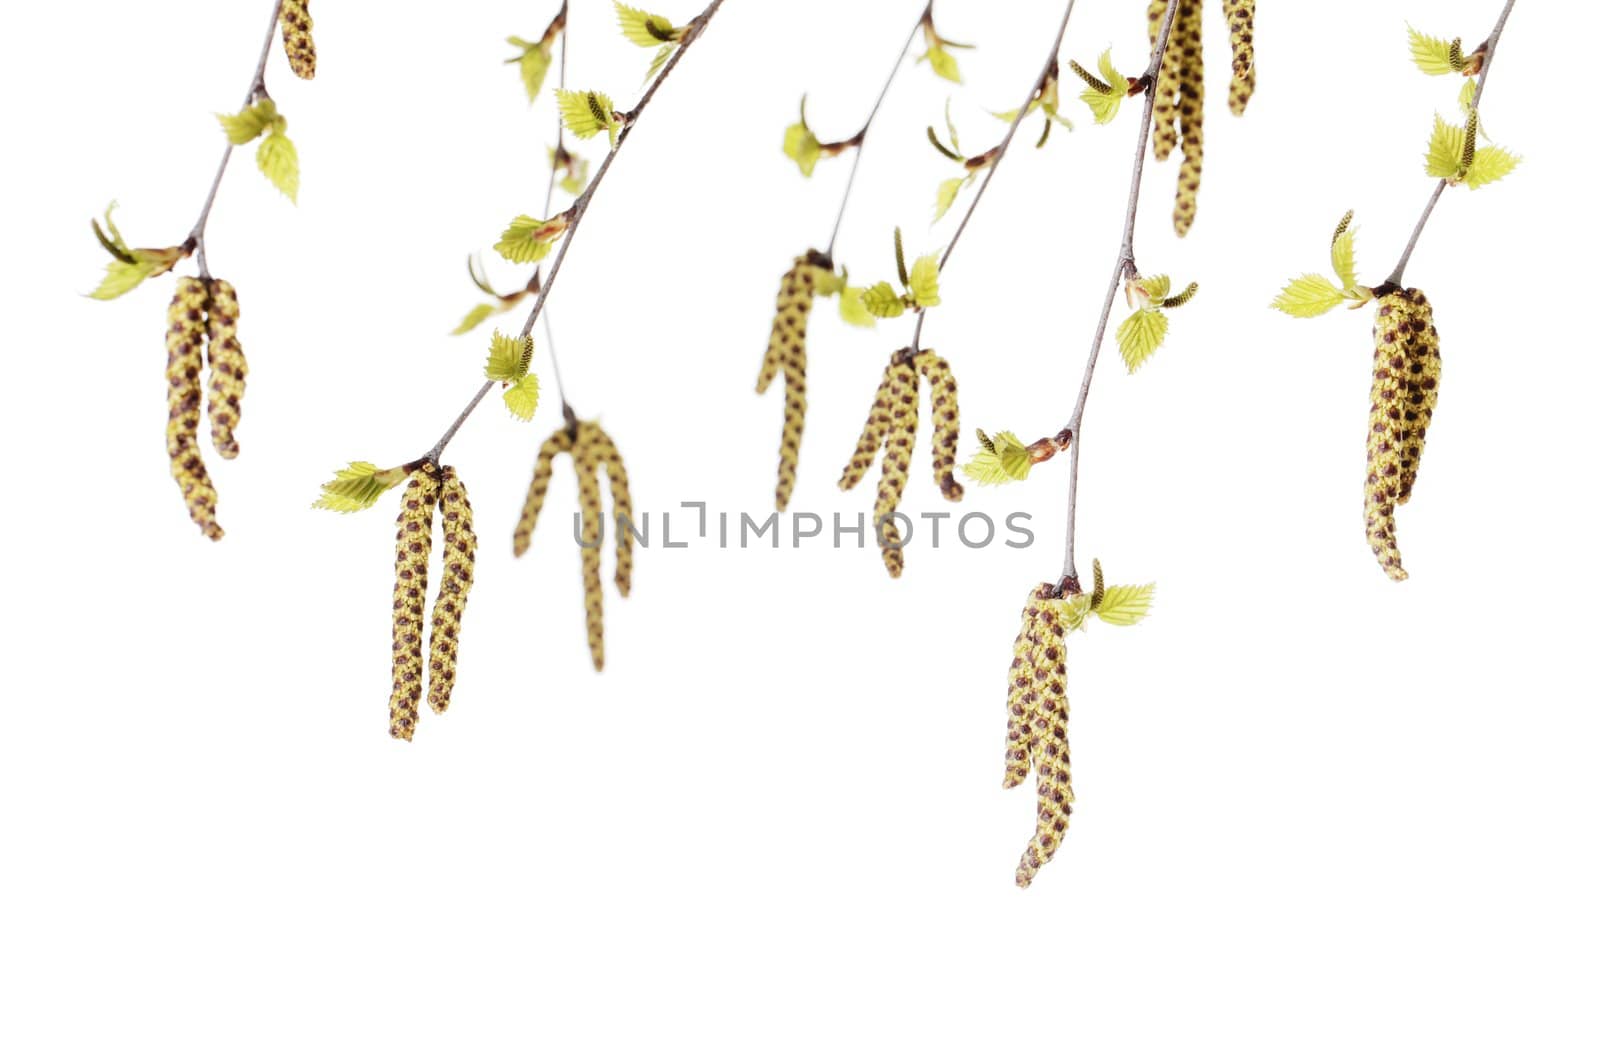 Studio photograph of flowers/catkins of a birch (Betula) tree.